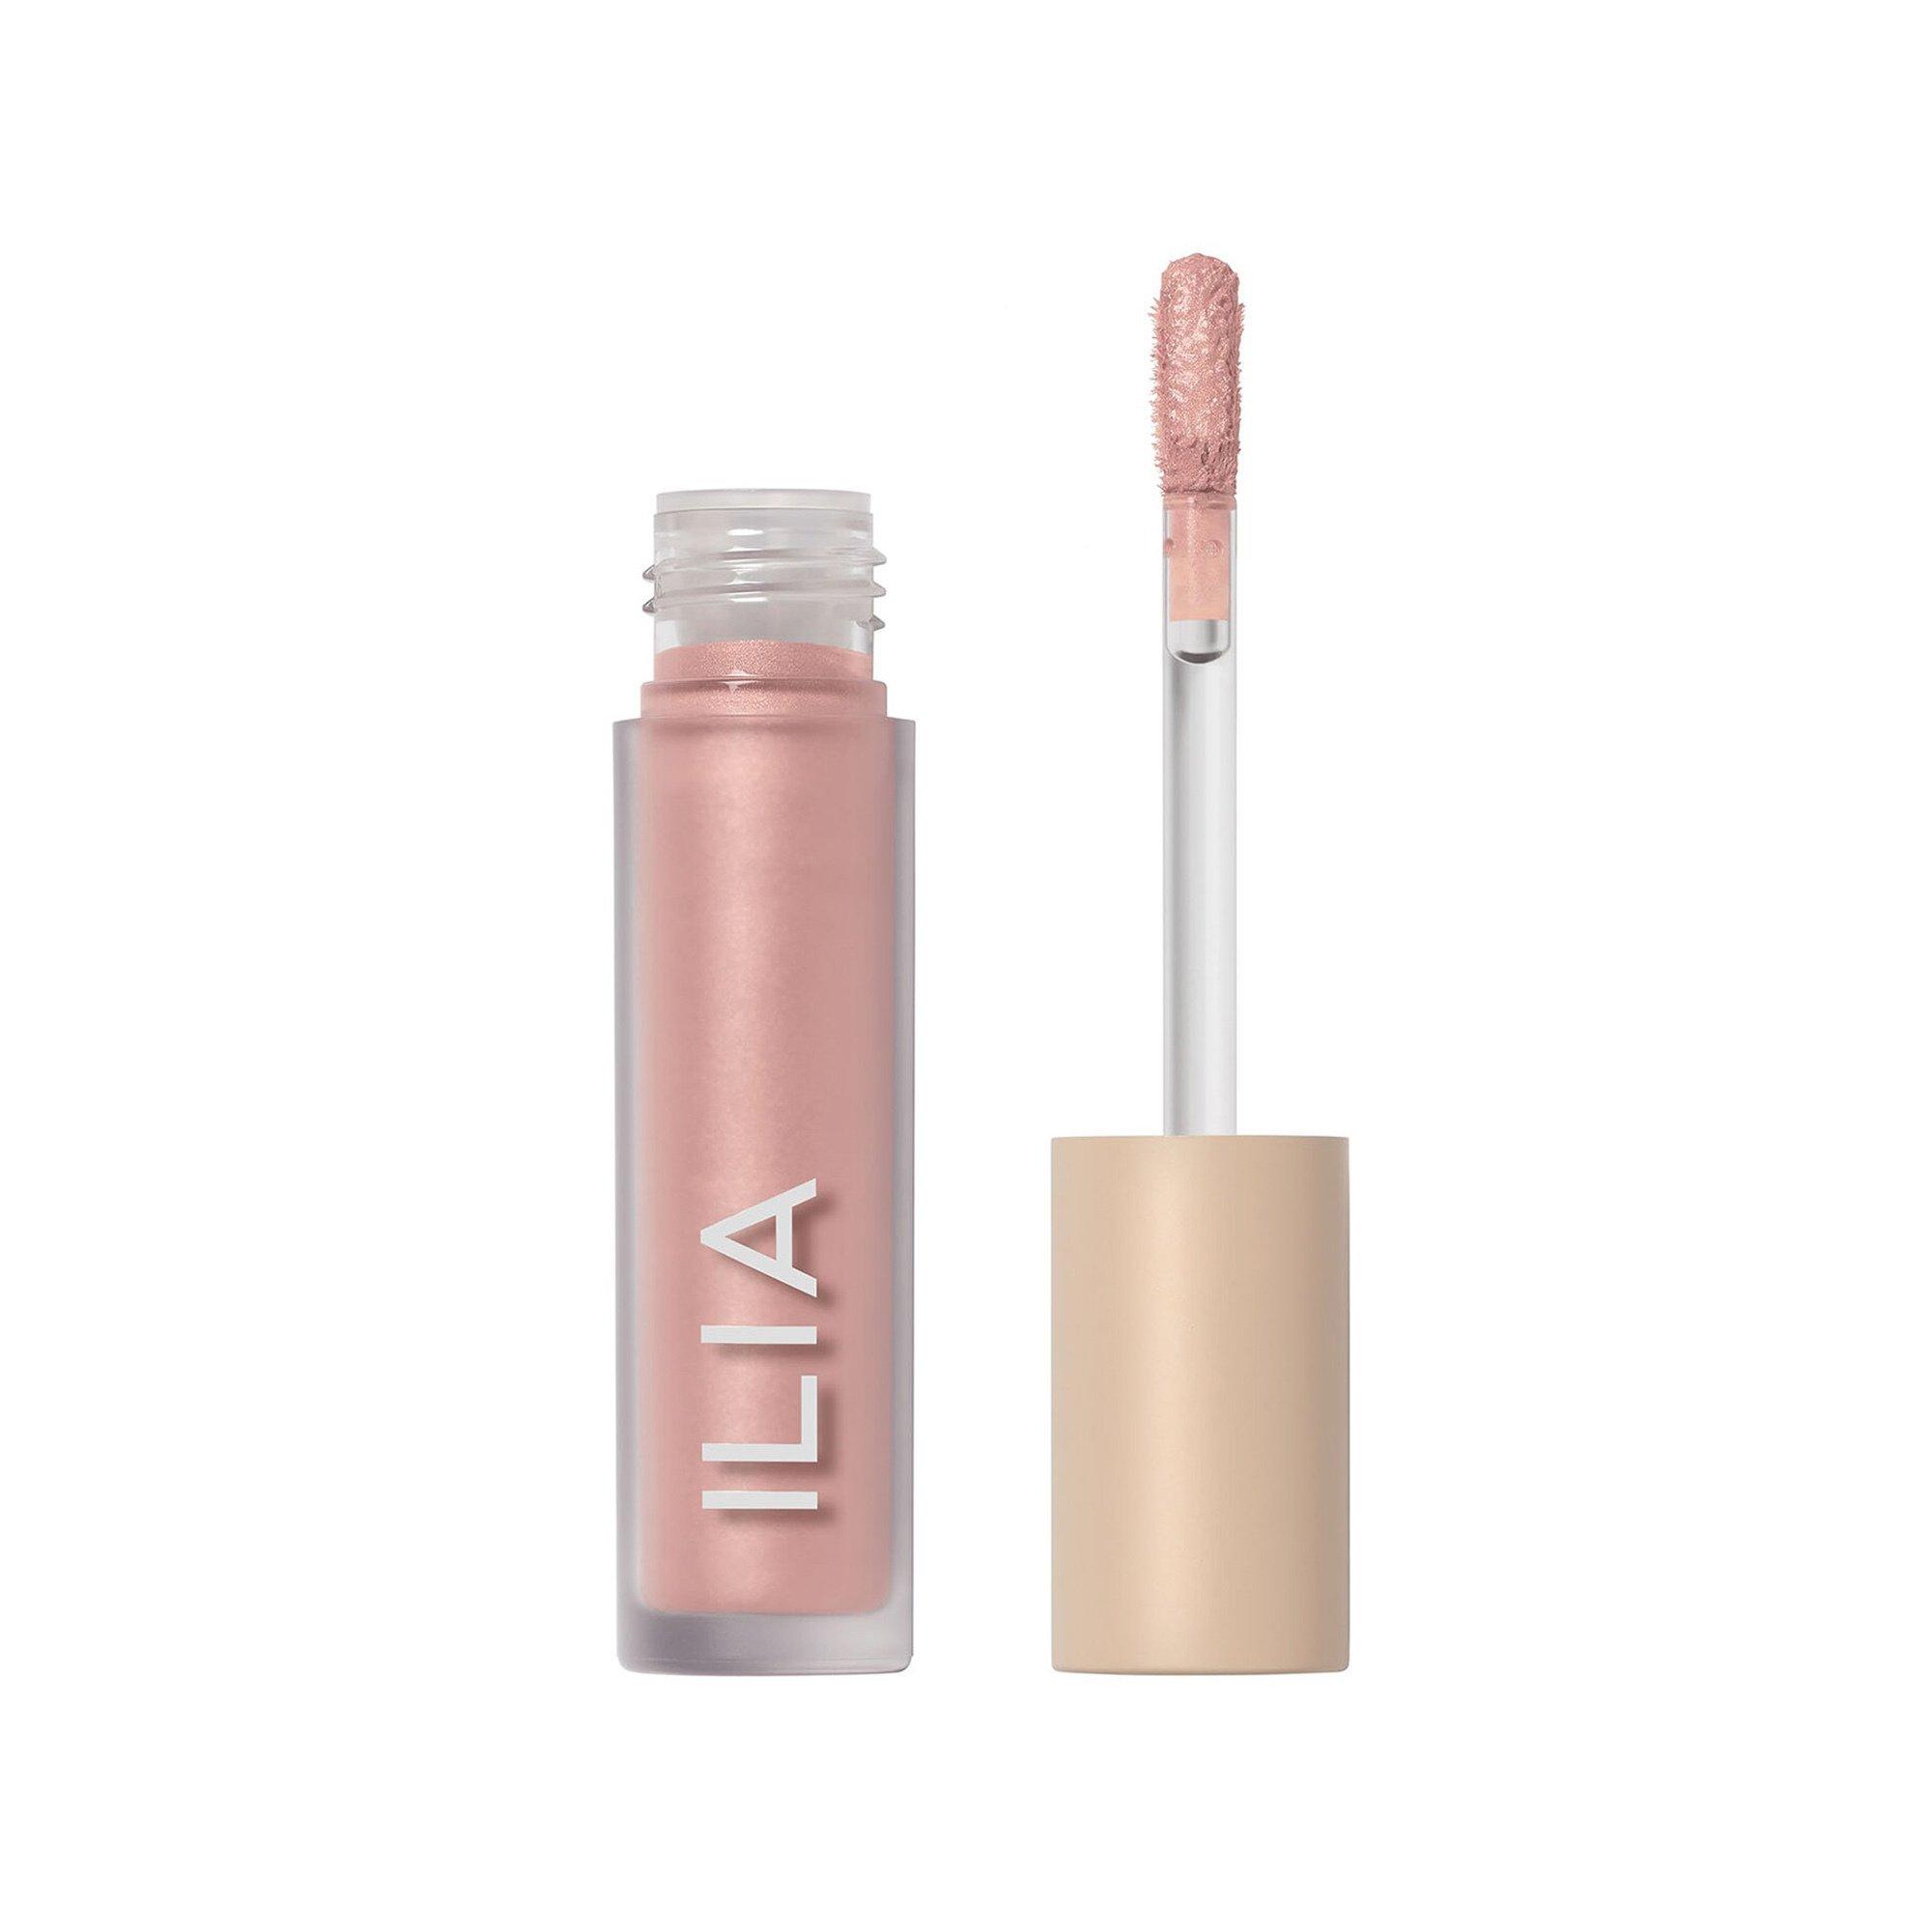 ILIA  Liquid powder chromatic eye tint - Fard à paupières liquide 